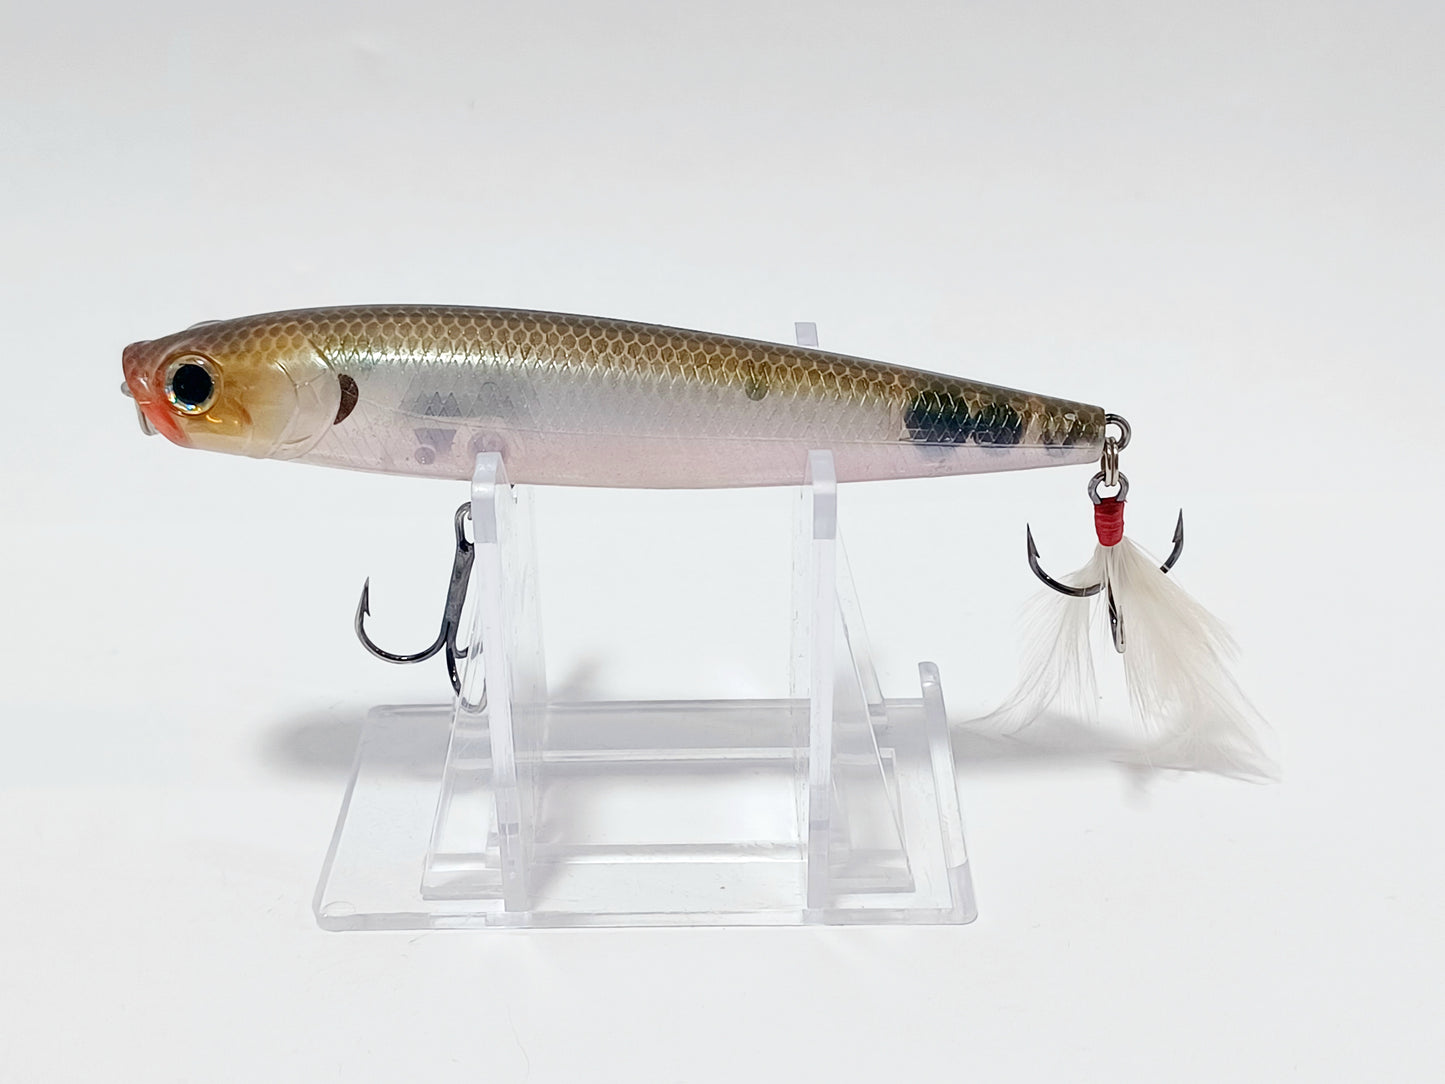 Classic Lucky Craft GUN FISH 95 ghost minnow topwater 3/8oz lure